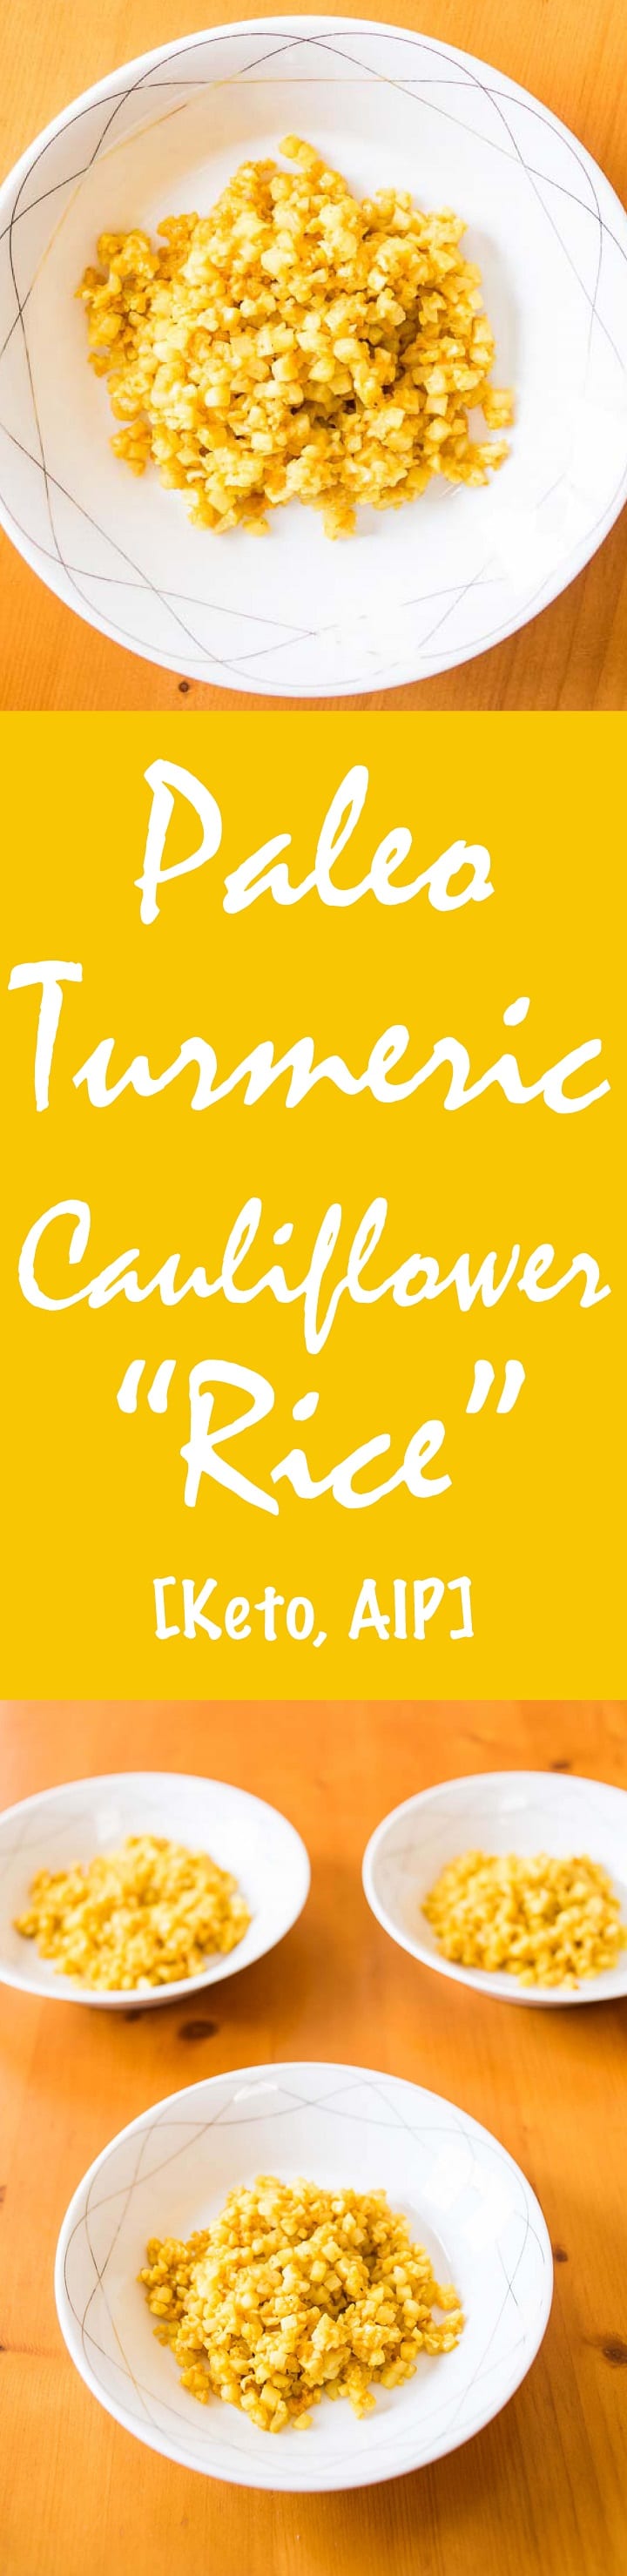 Paleo Turmeric Cauliflower “Rice” Recipe [Keto, AIP] #paleo #recipe http://paleoflourish.com/paleo-turmeric-cauliflower-rice-recipe